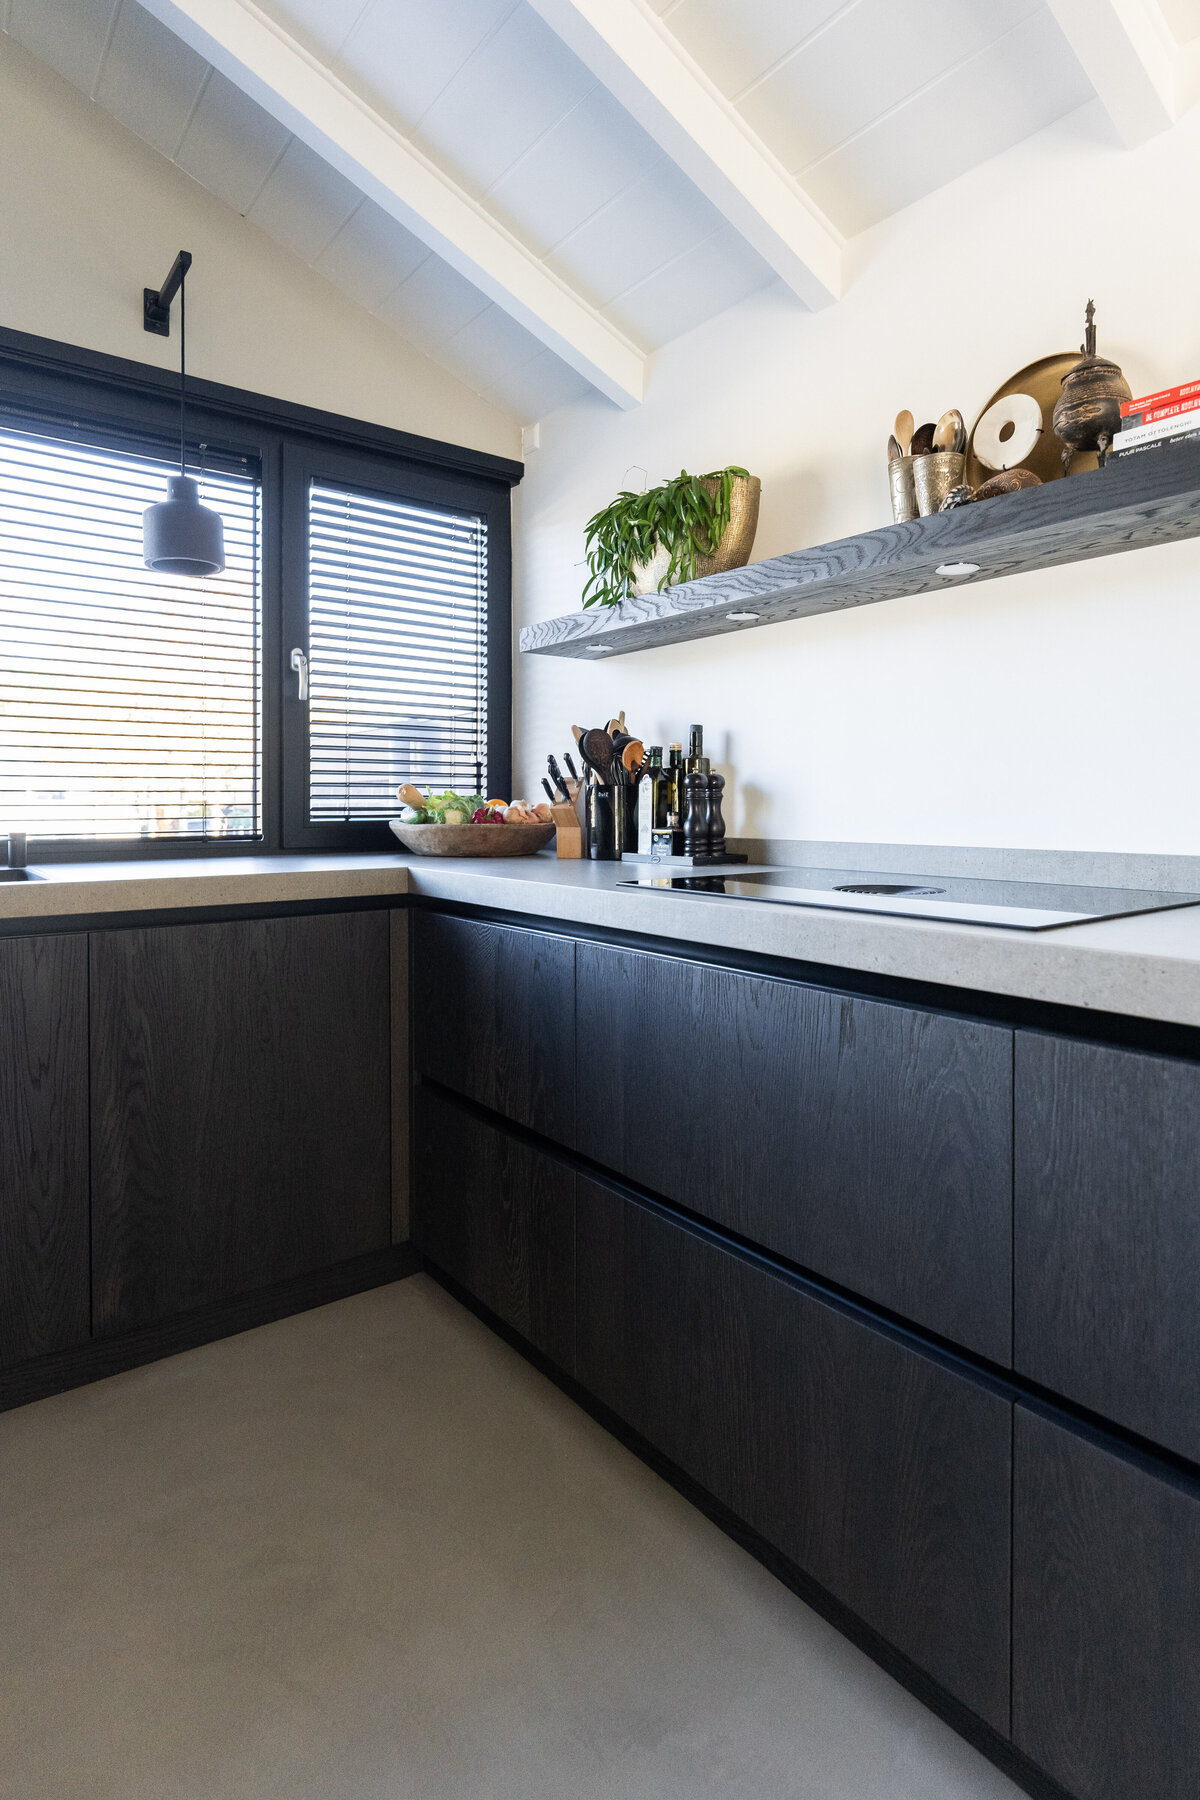 Keuken en interieur stoere keuken hout beton (6)